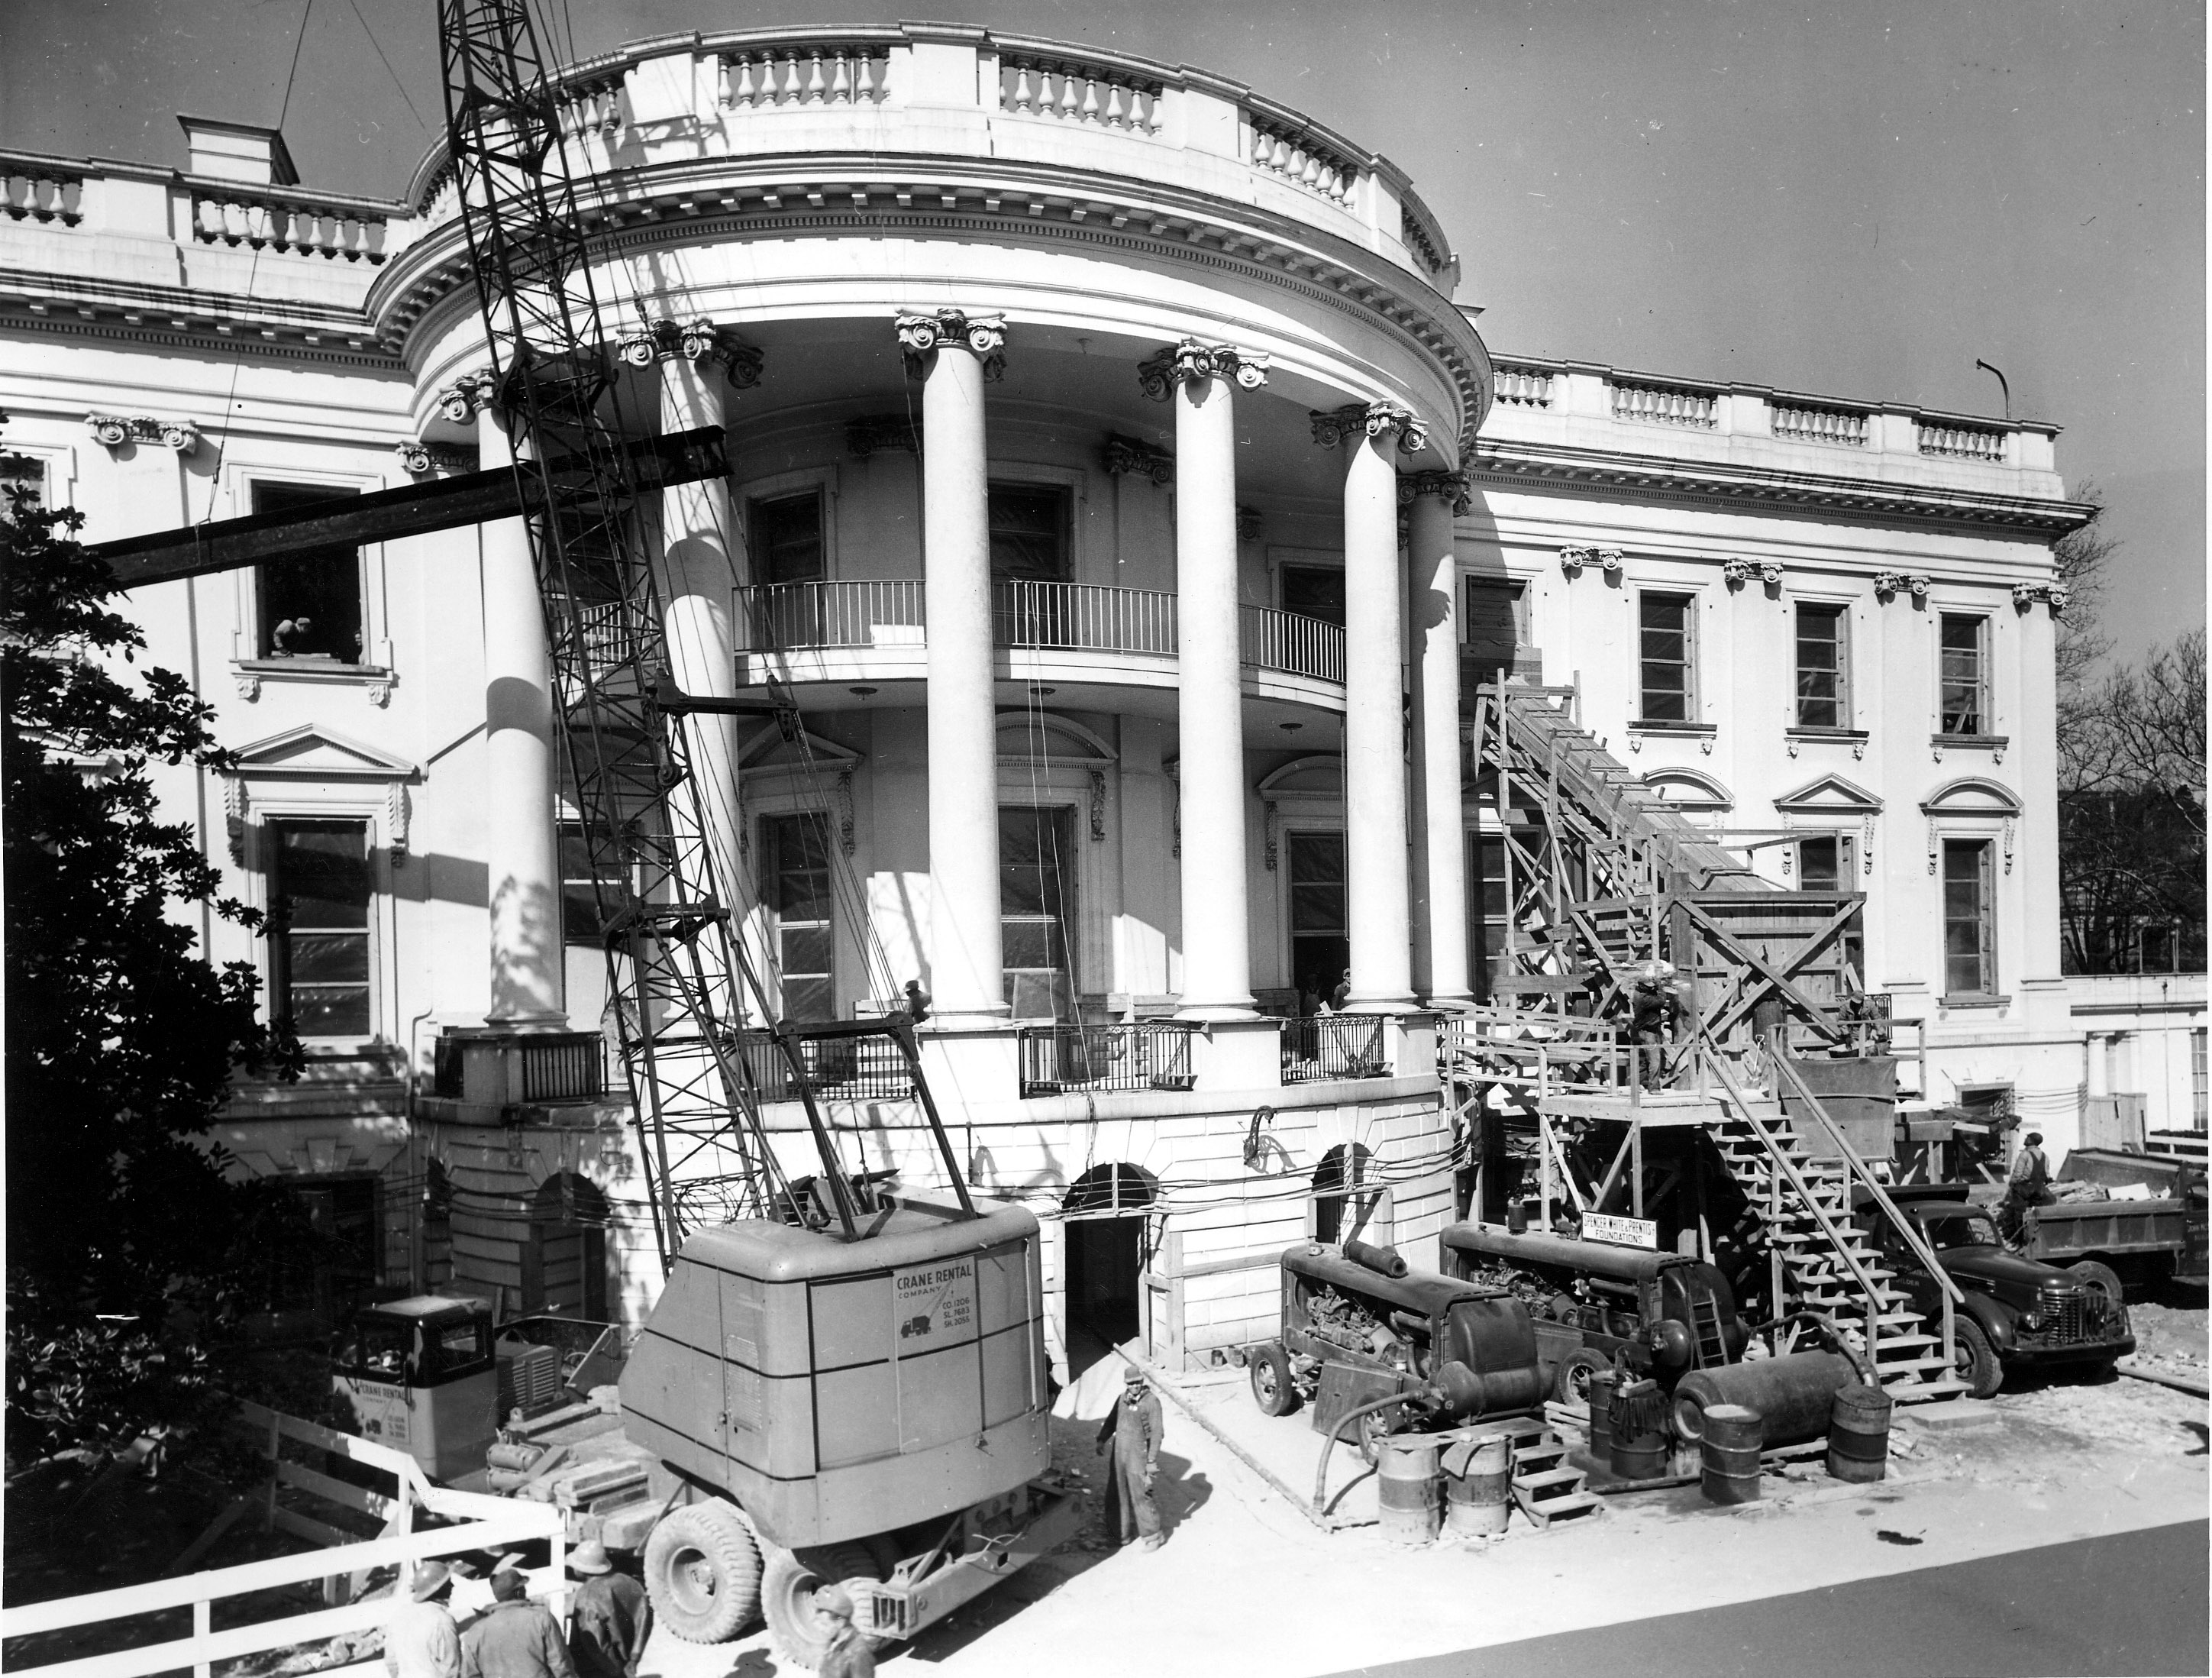 Construction equipment outside the White House during major renovation, Washington DC, United States, 27 Feb 1950